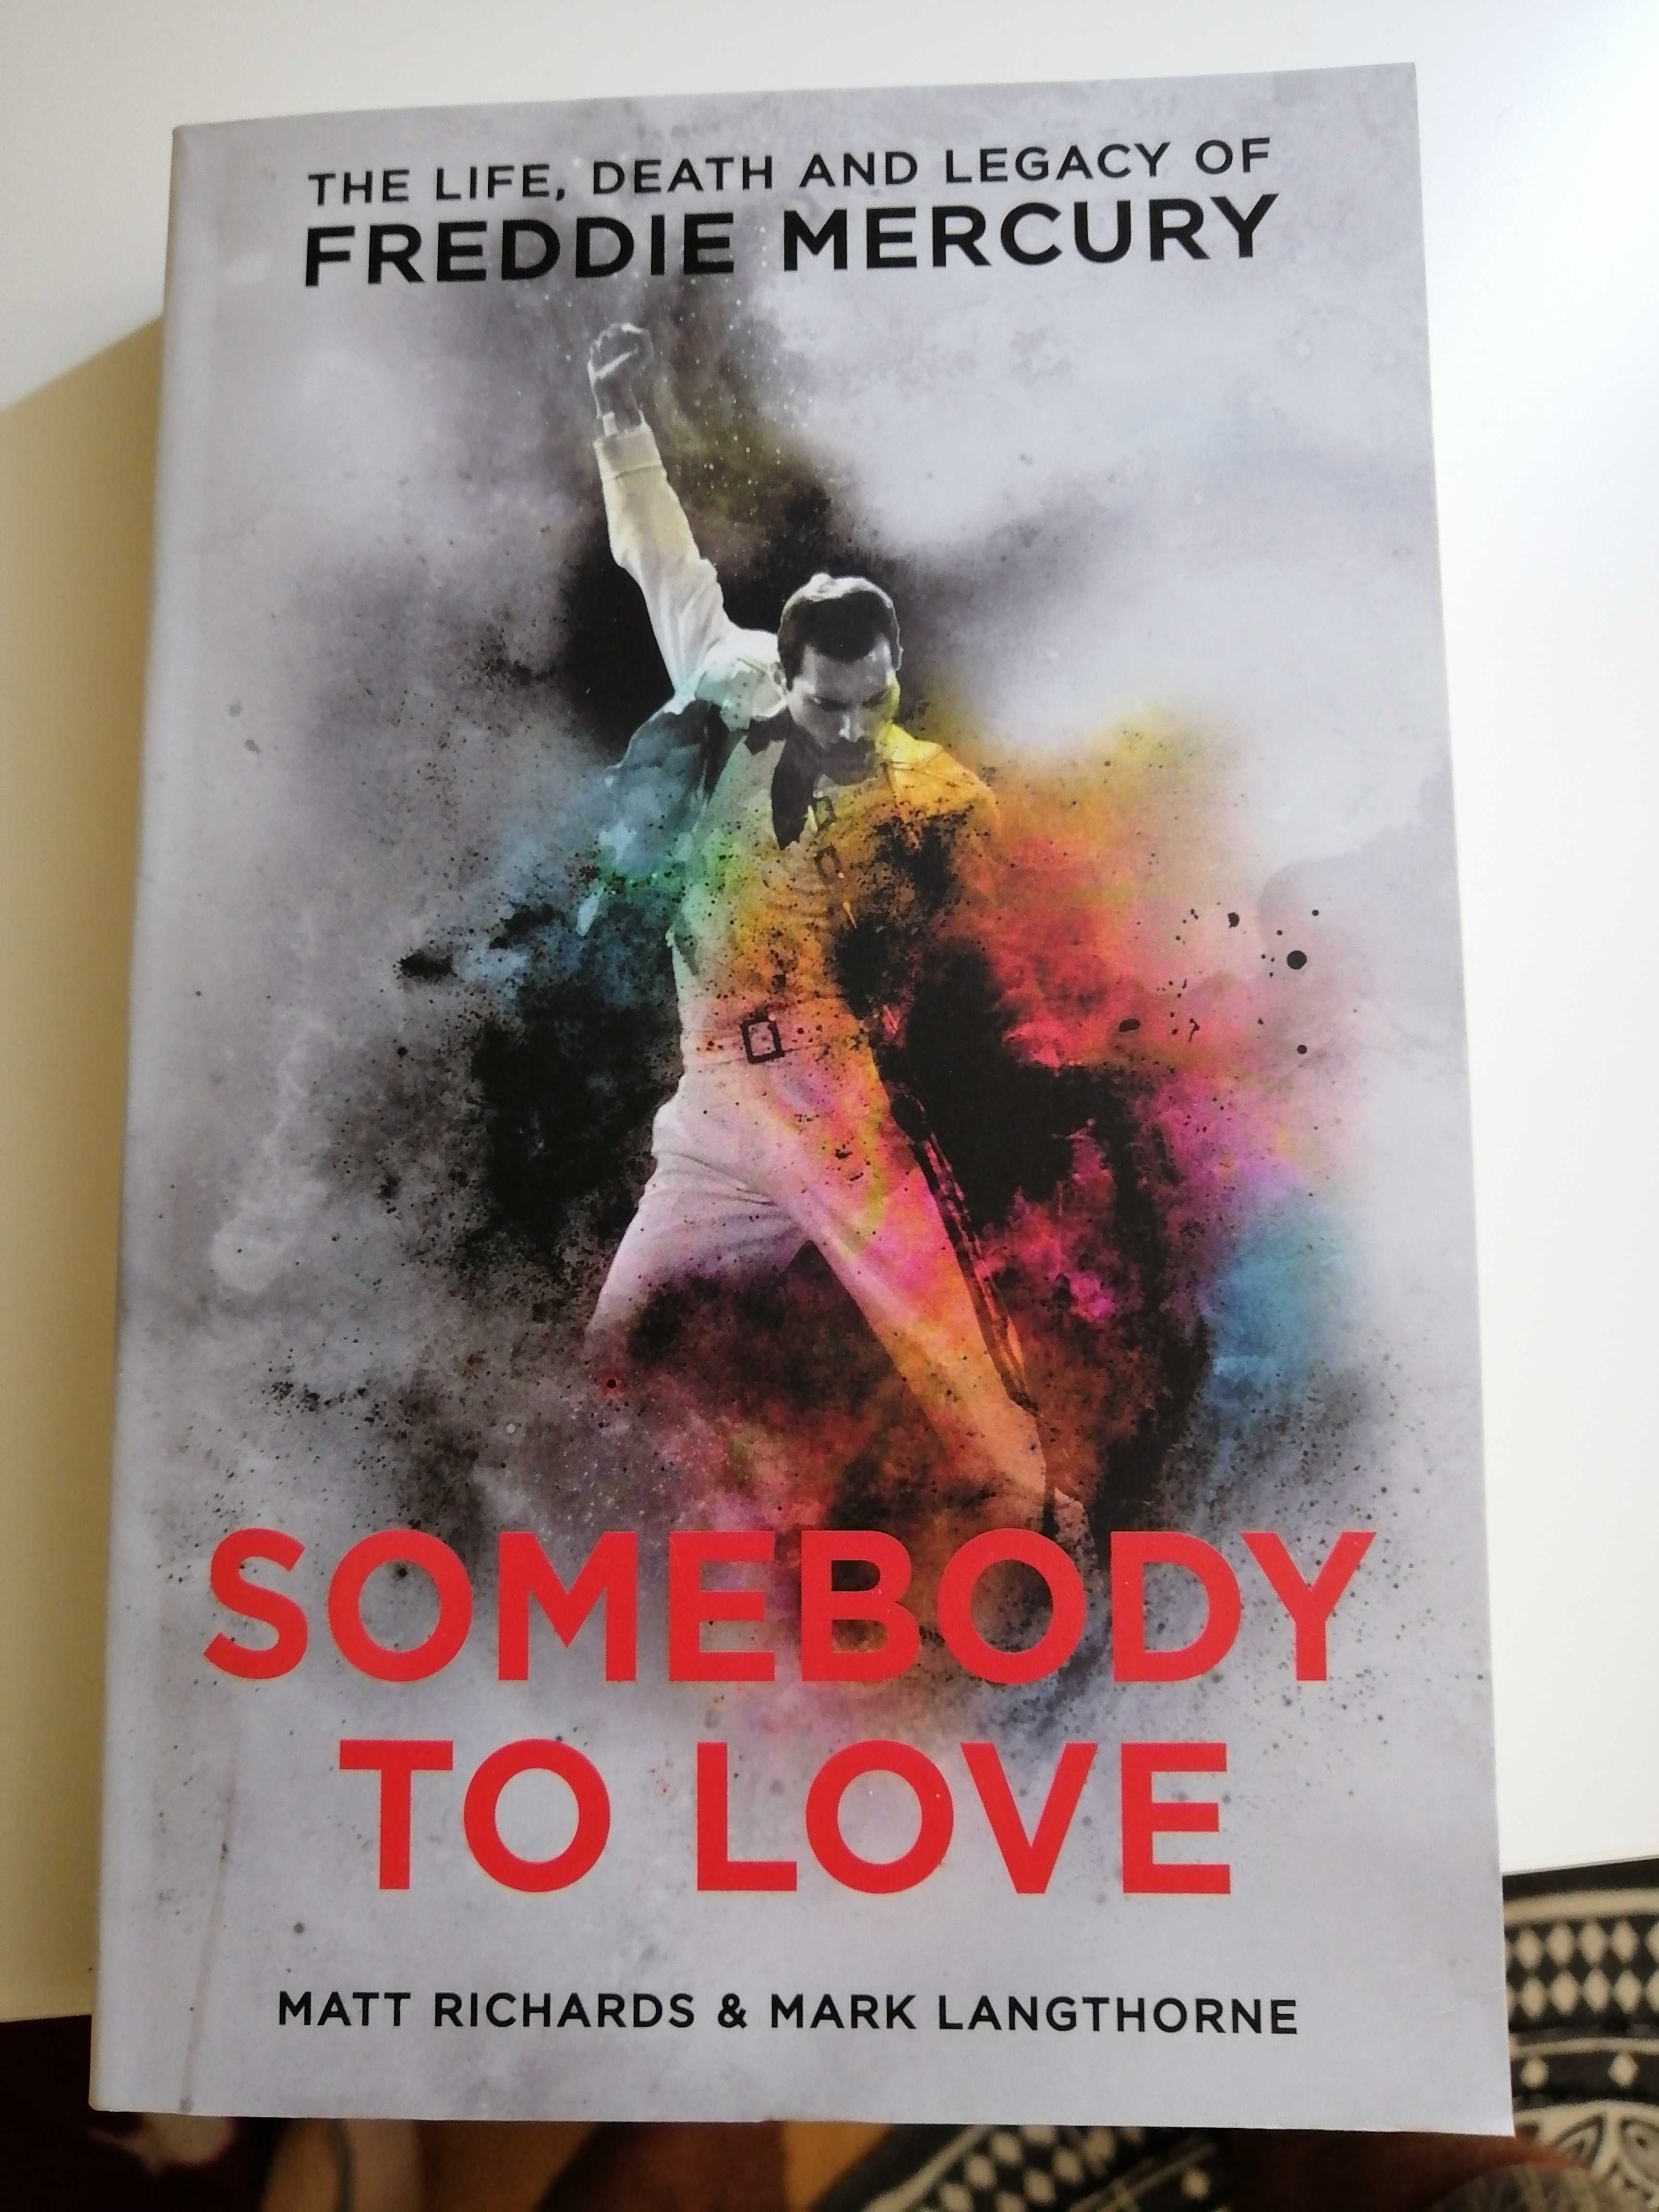 Livro "Somebody to love"